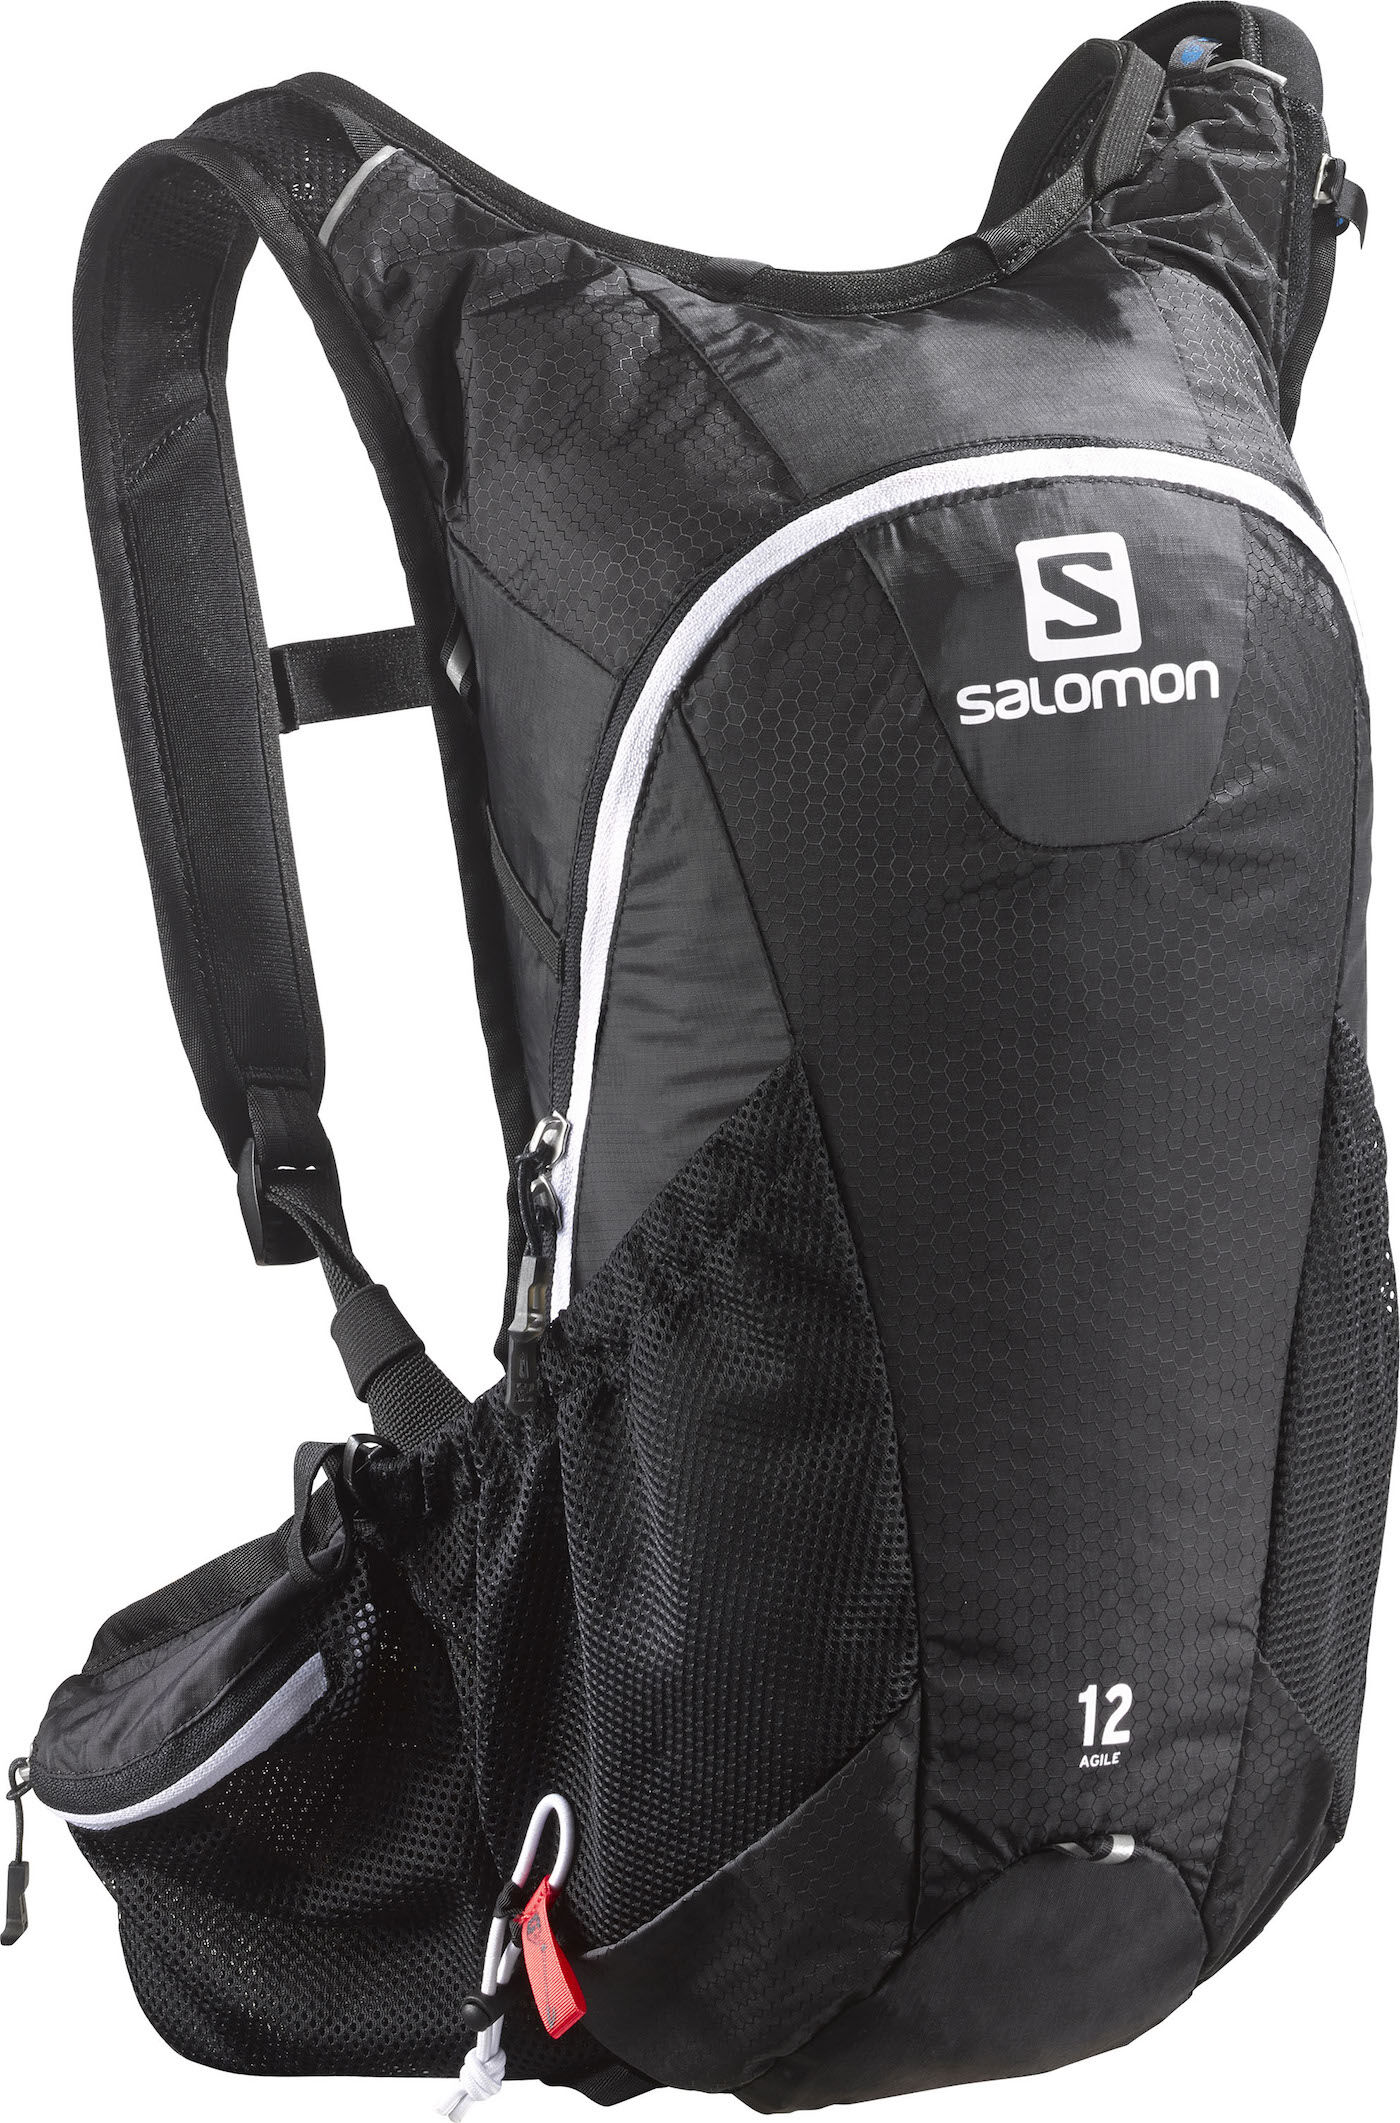 Salomon - 12 Set - Hydratation pack